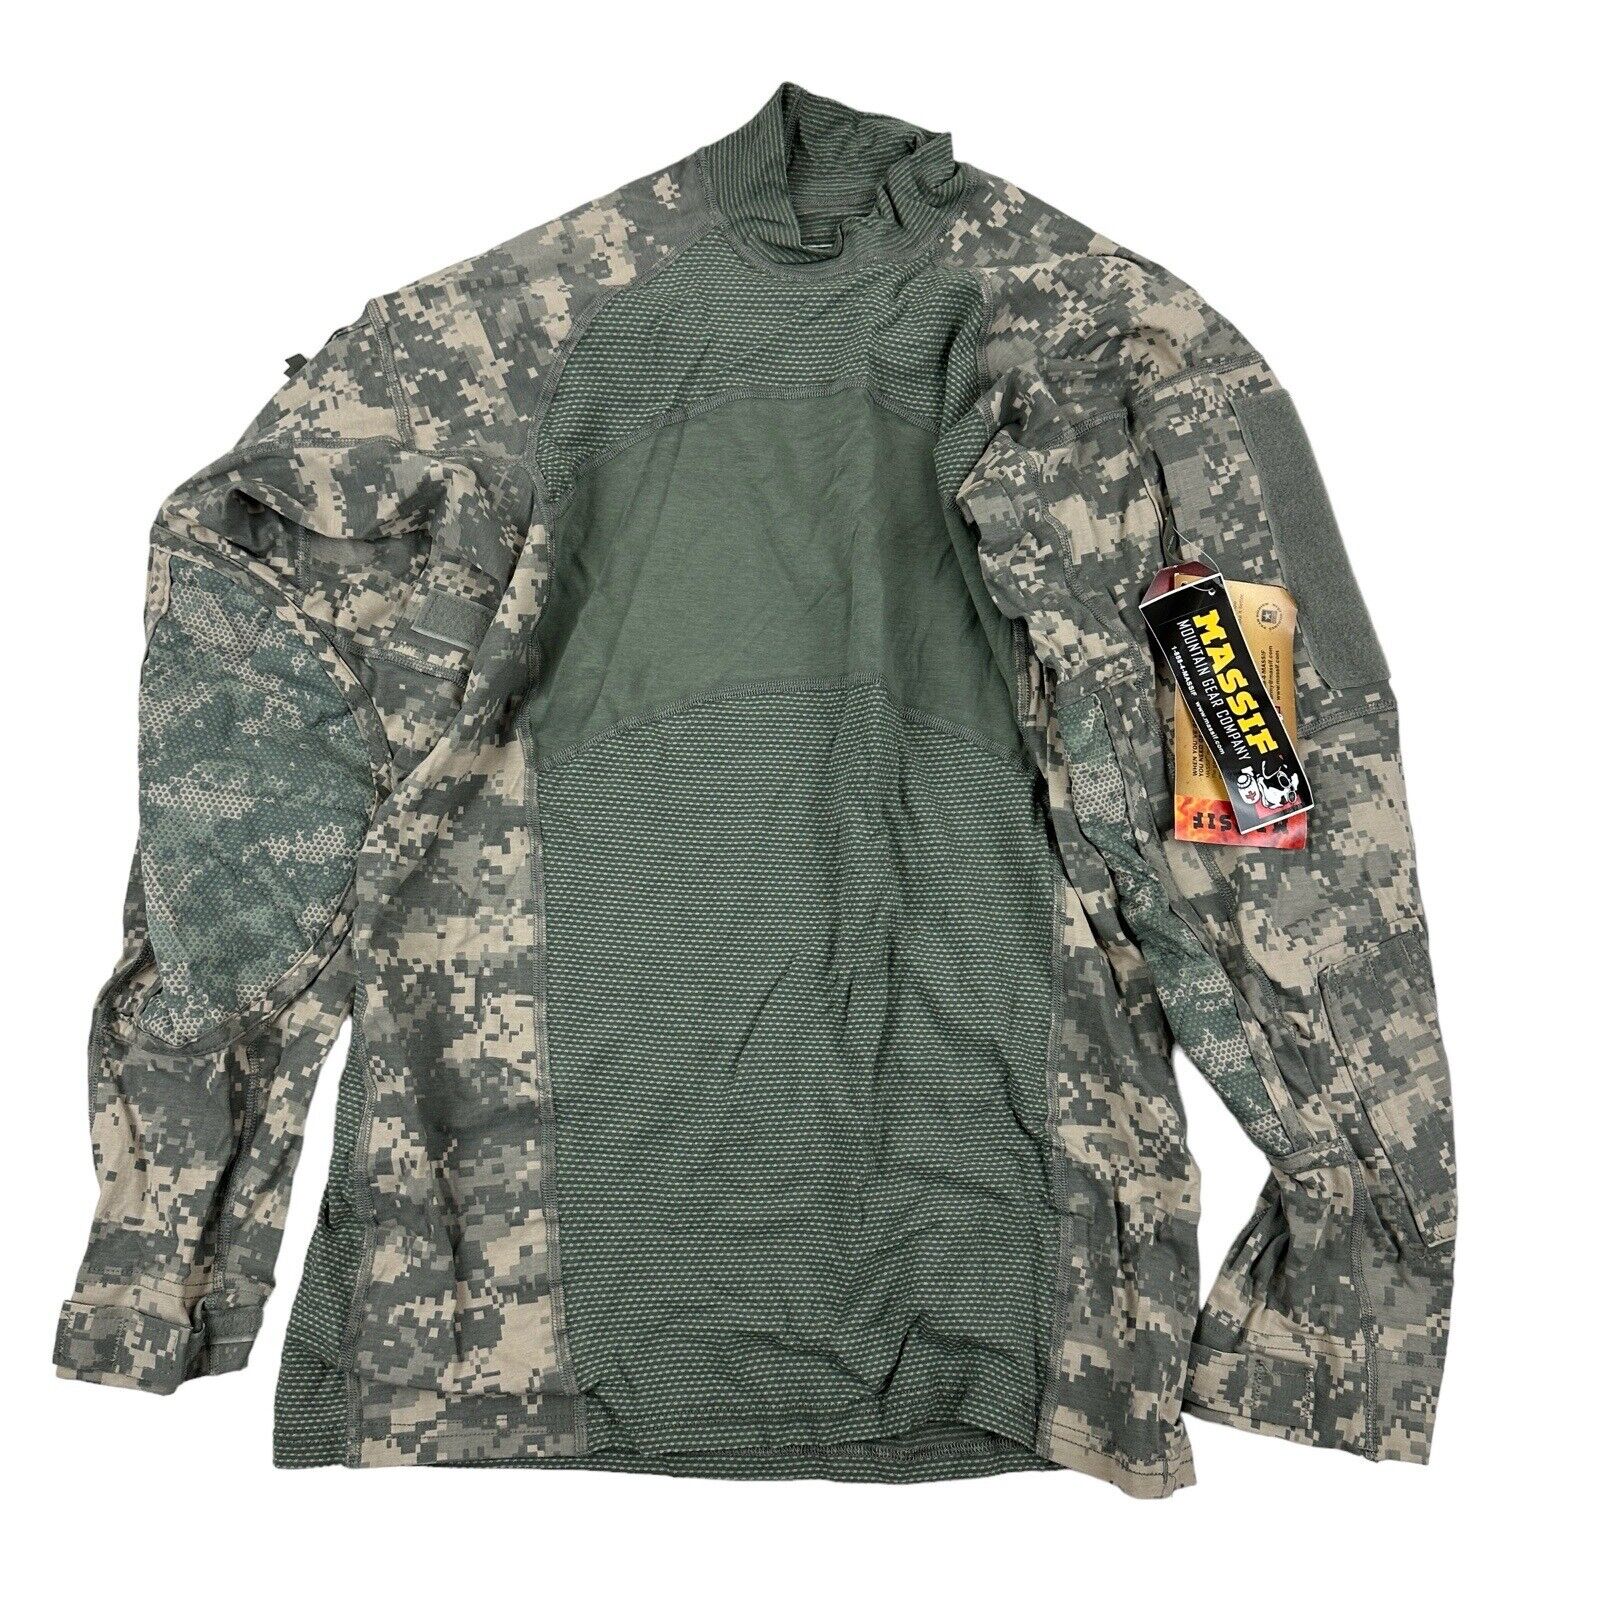 NWT USGI ACU MASSIF Digital Camo Army Combat Shirt Flame Resistant ACS